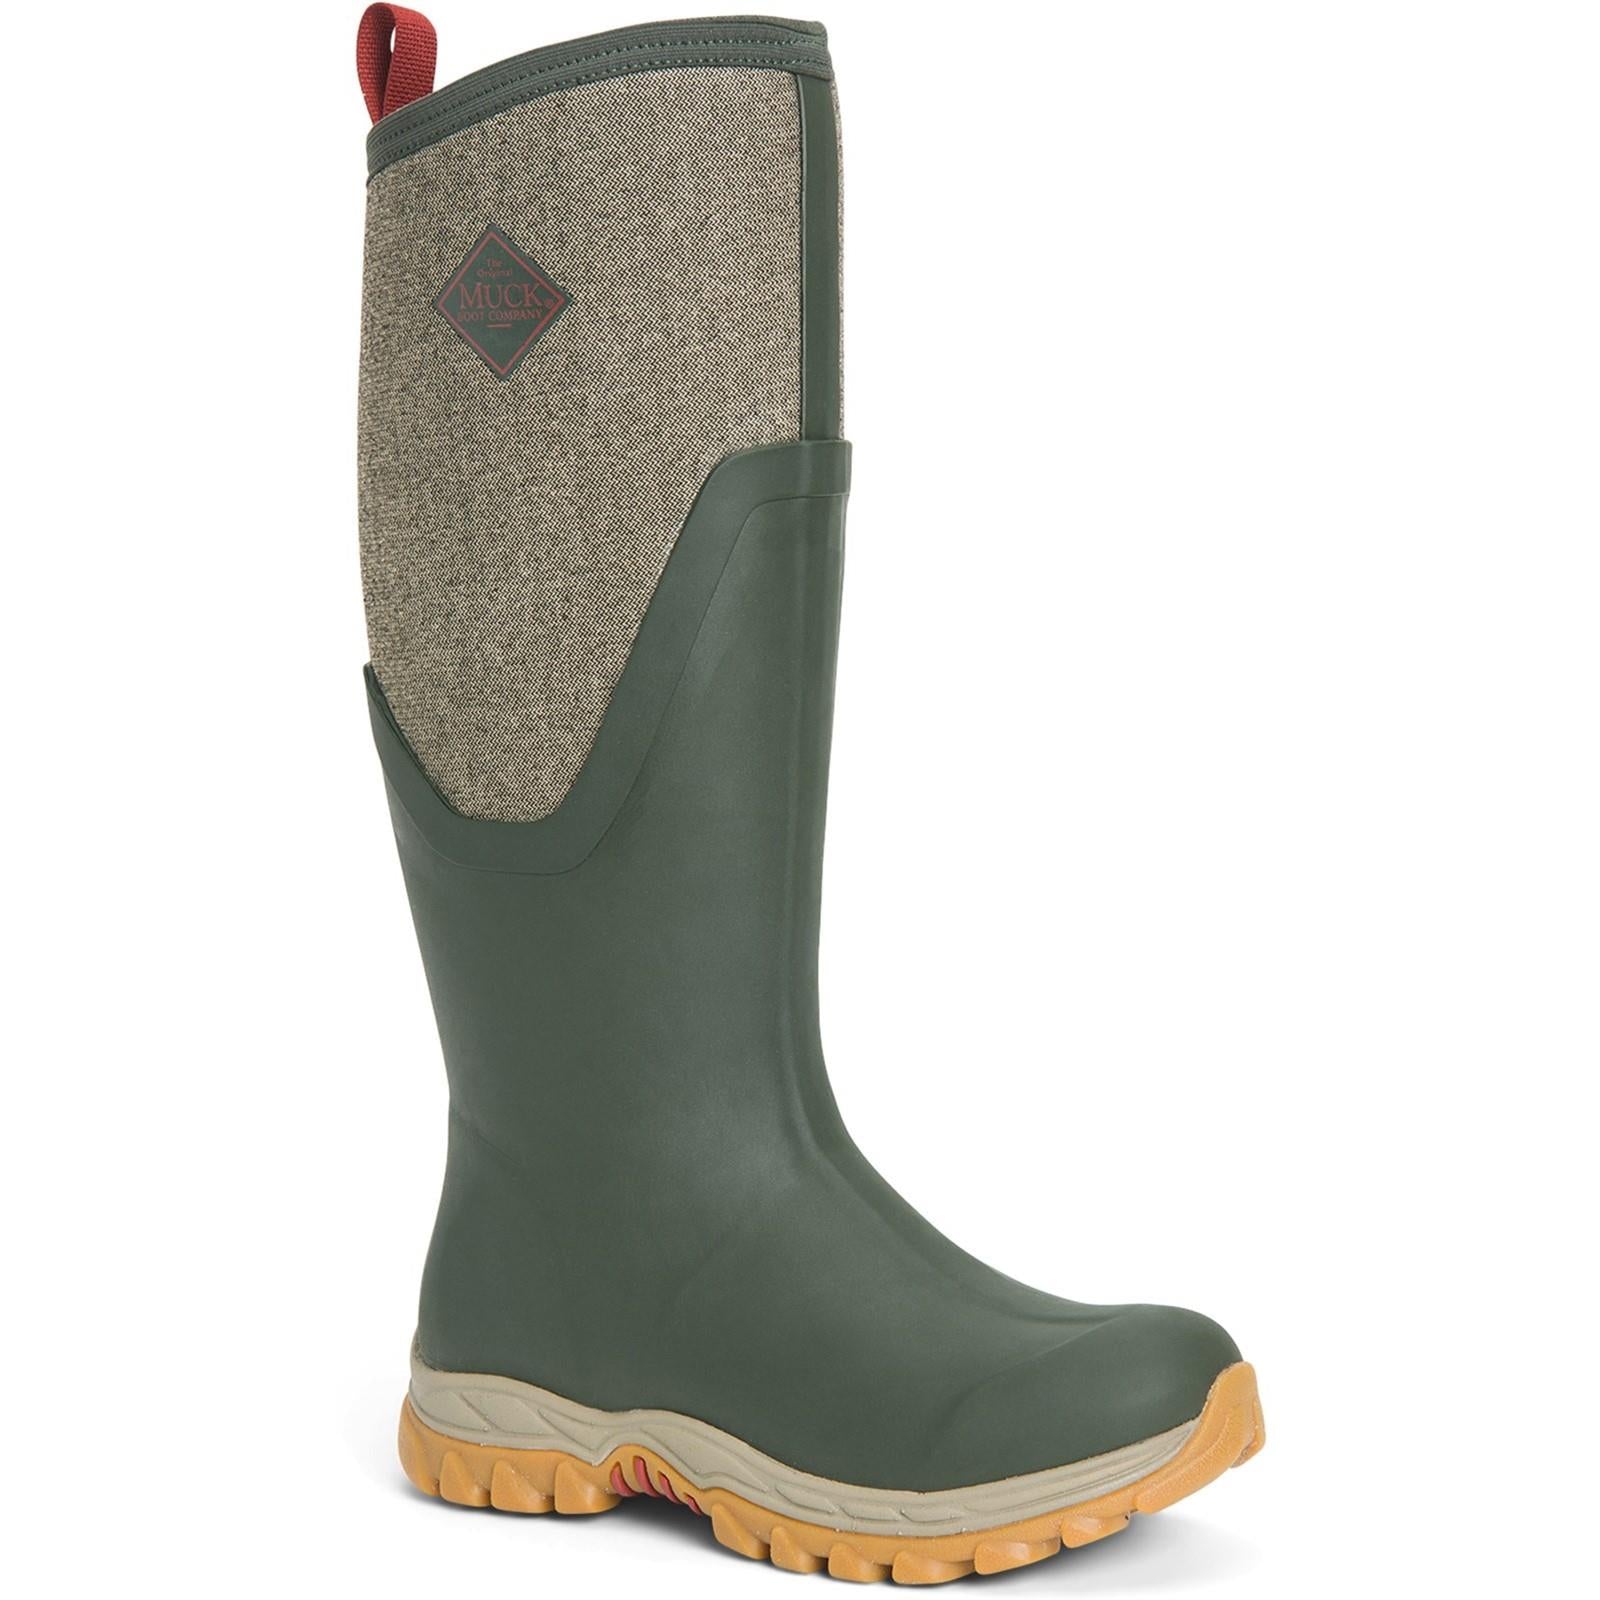 Muck Boots Arctic Sport II Tall ladies olive warm fleece lined wellington boots